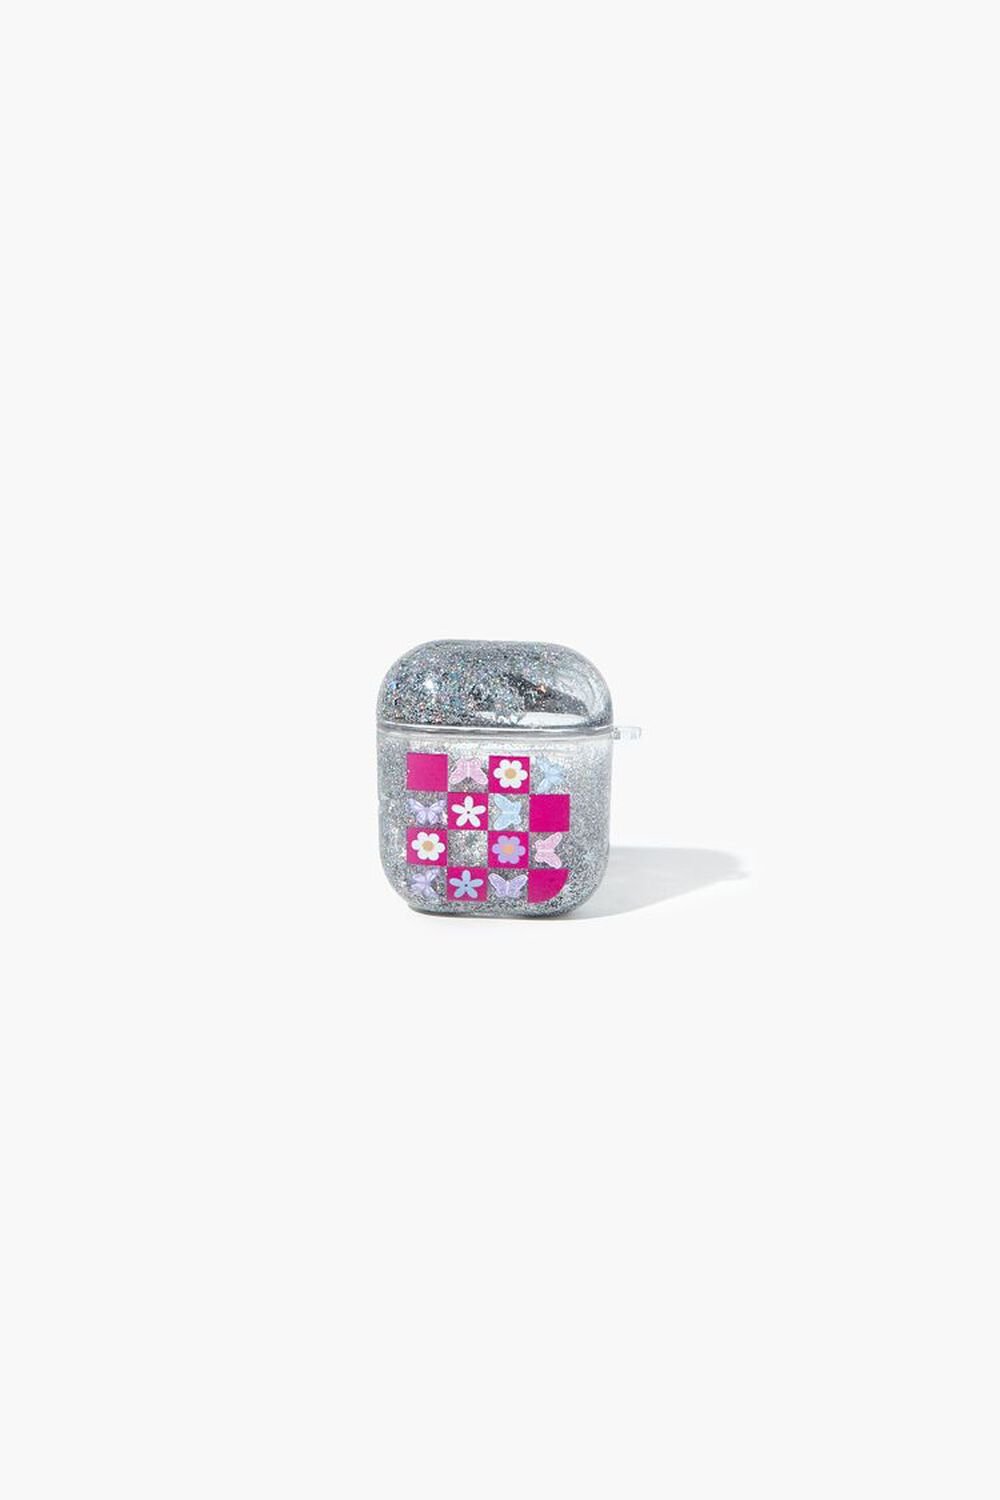 PINK/MULTI Glittered Floral Earbuds Case, image 1